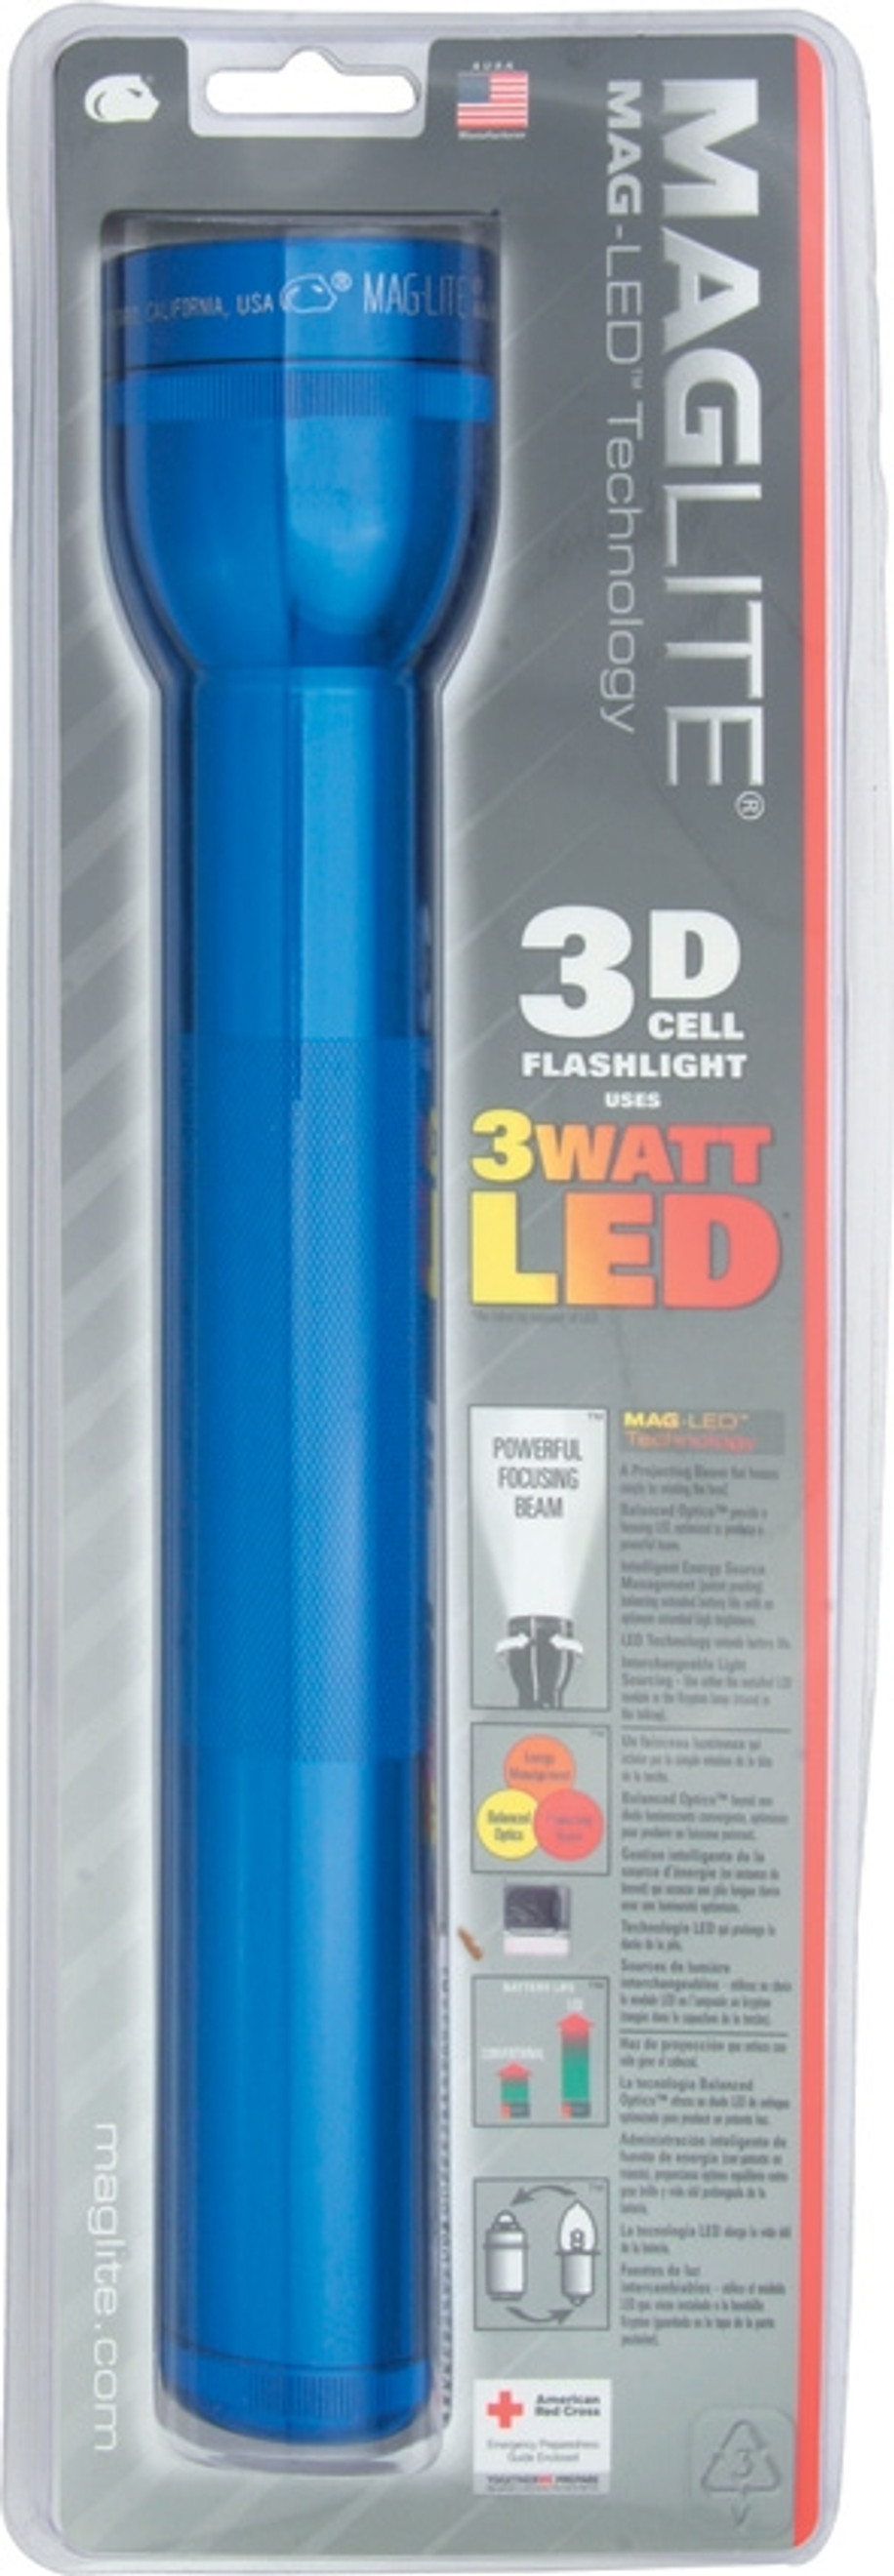 3D Cell LED Flashlight Blue